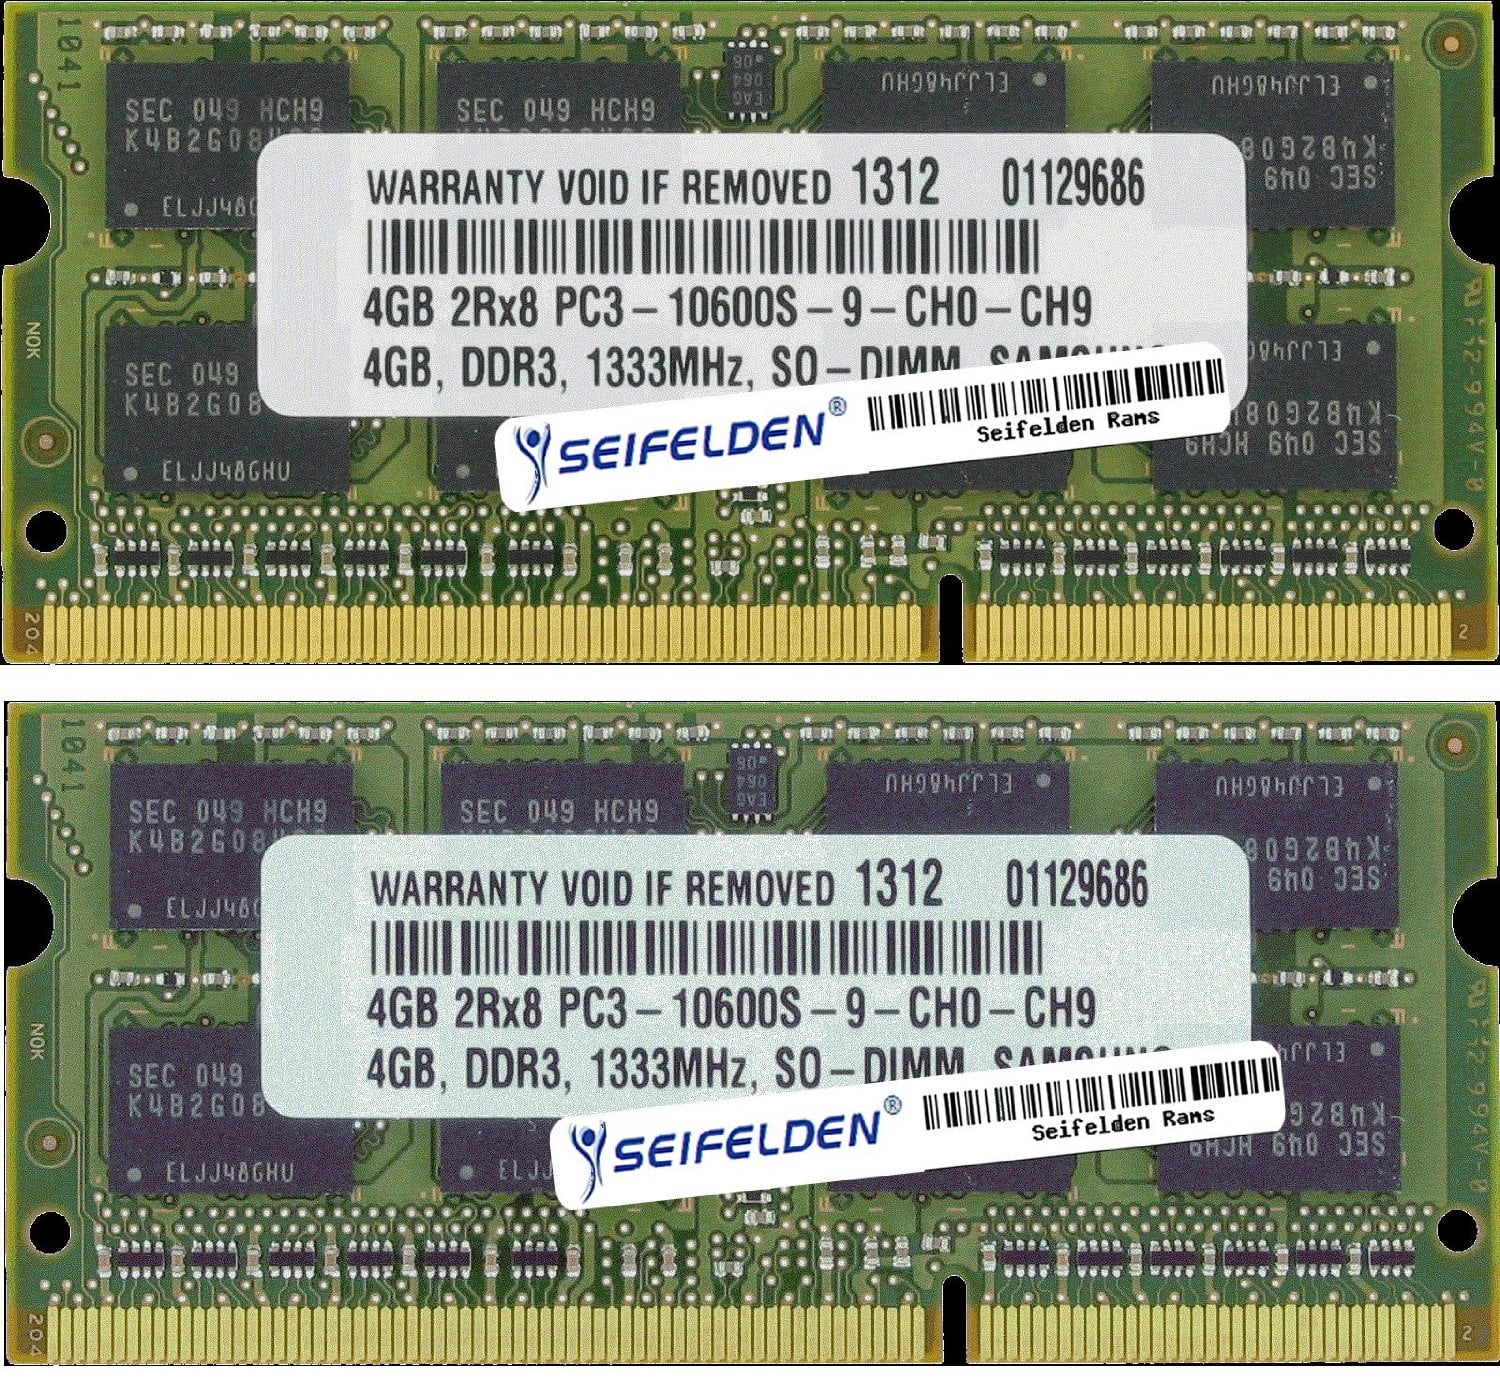 DDR3-8500 Laptop Memory OFFTEK 4GB Replacement RAM Memory for Toshiba Satellite L645-S4102